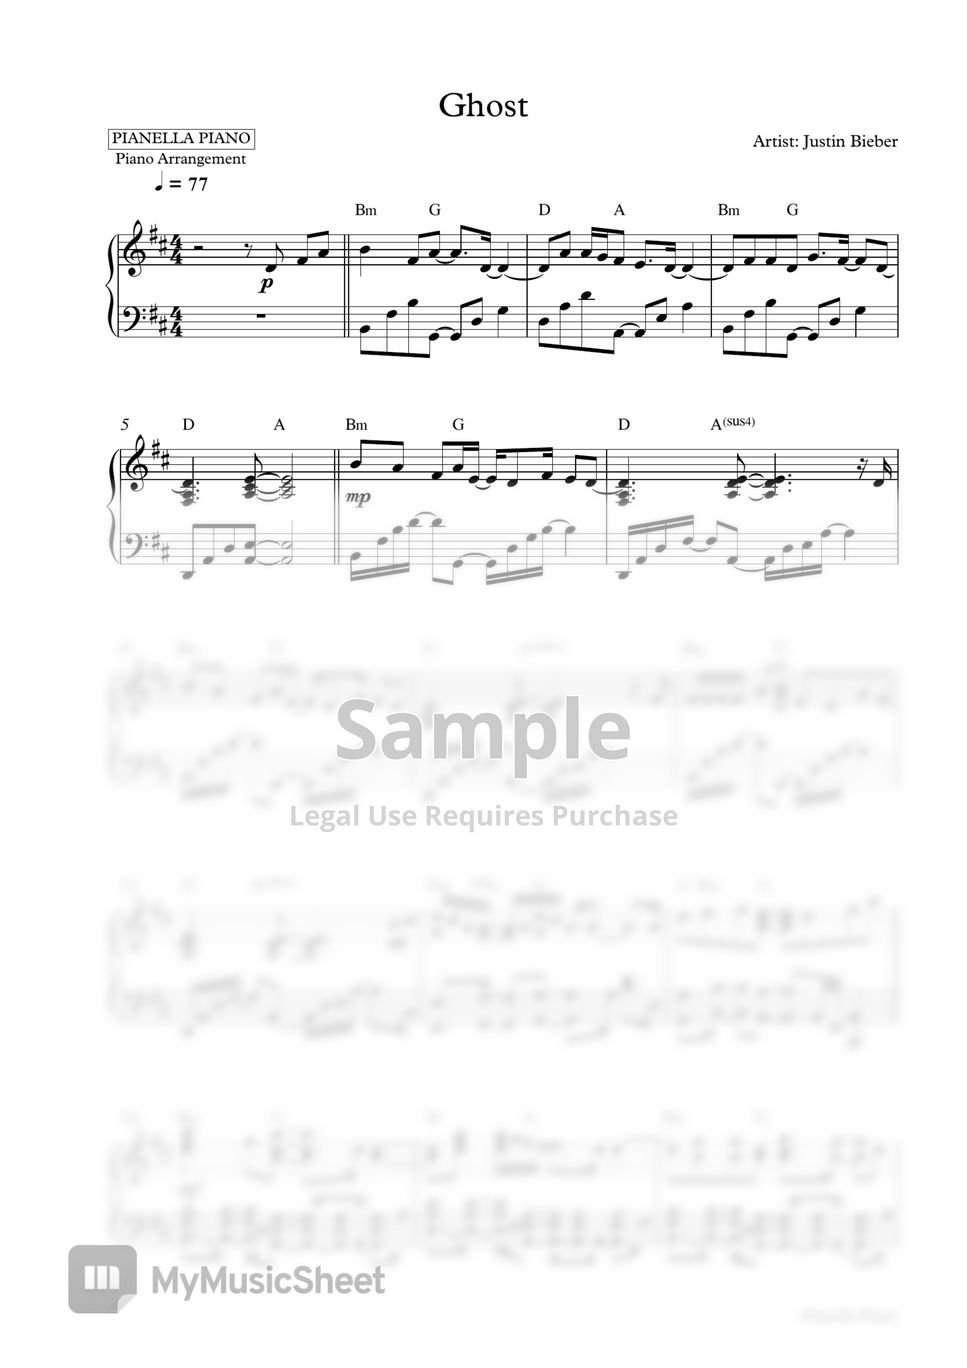 Ghost - Justin Bieber Sheet music for Piano, Violin (Solo)